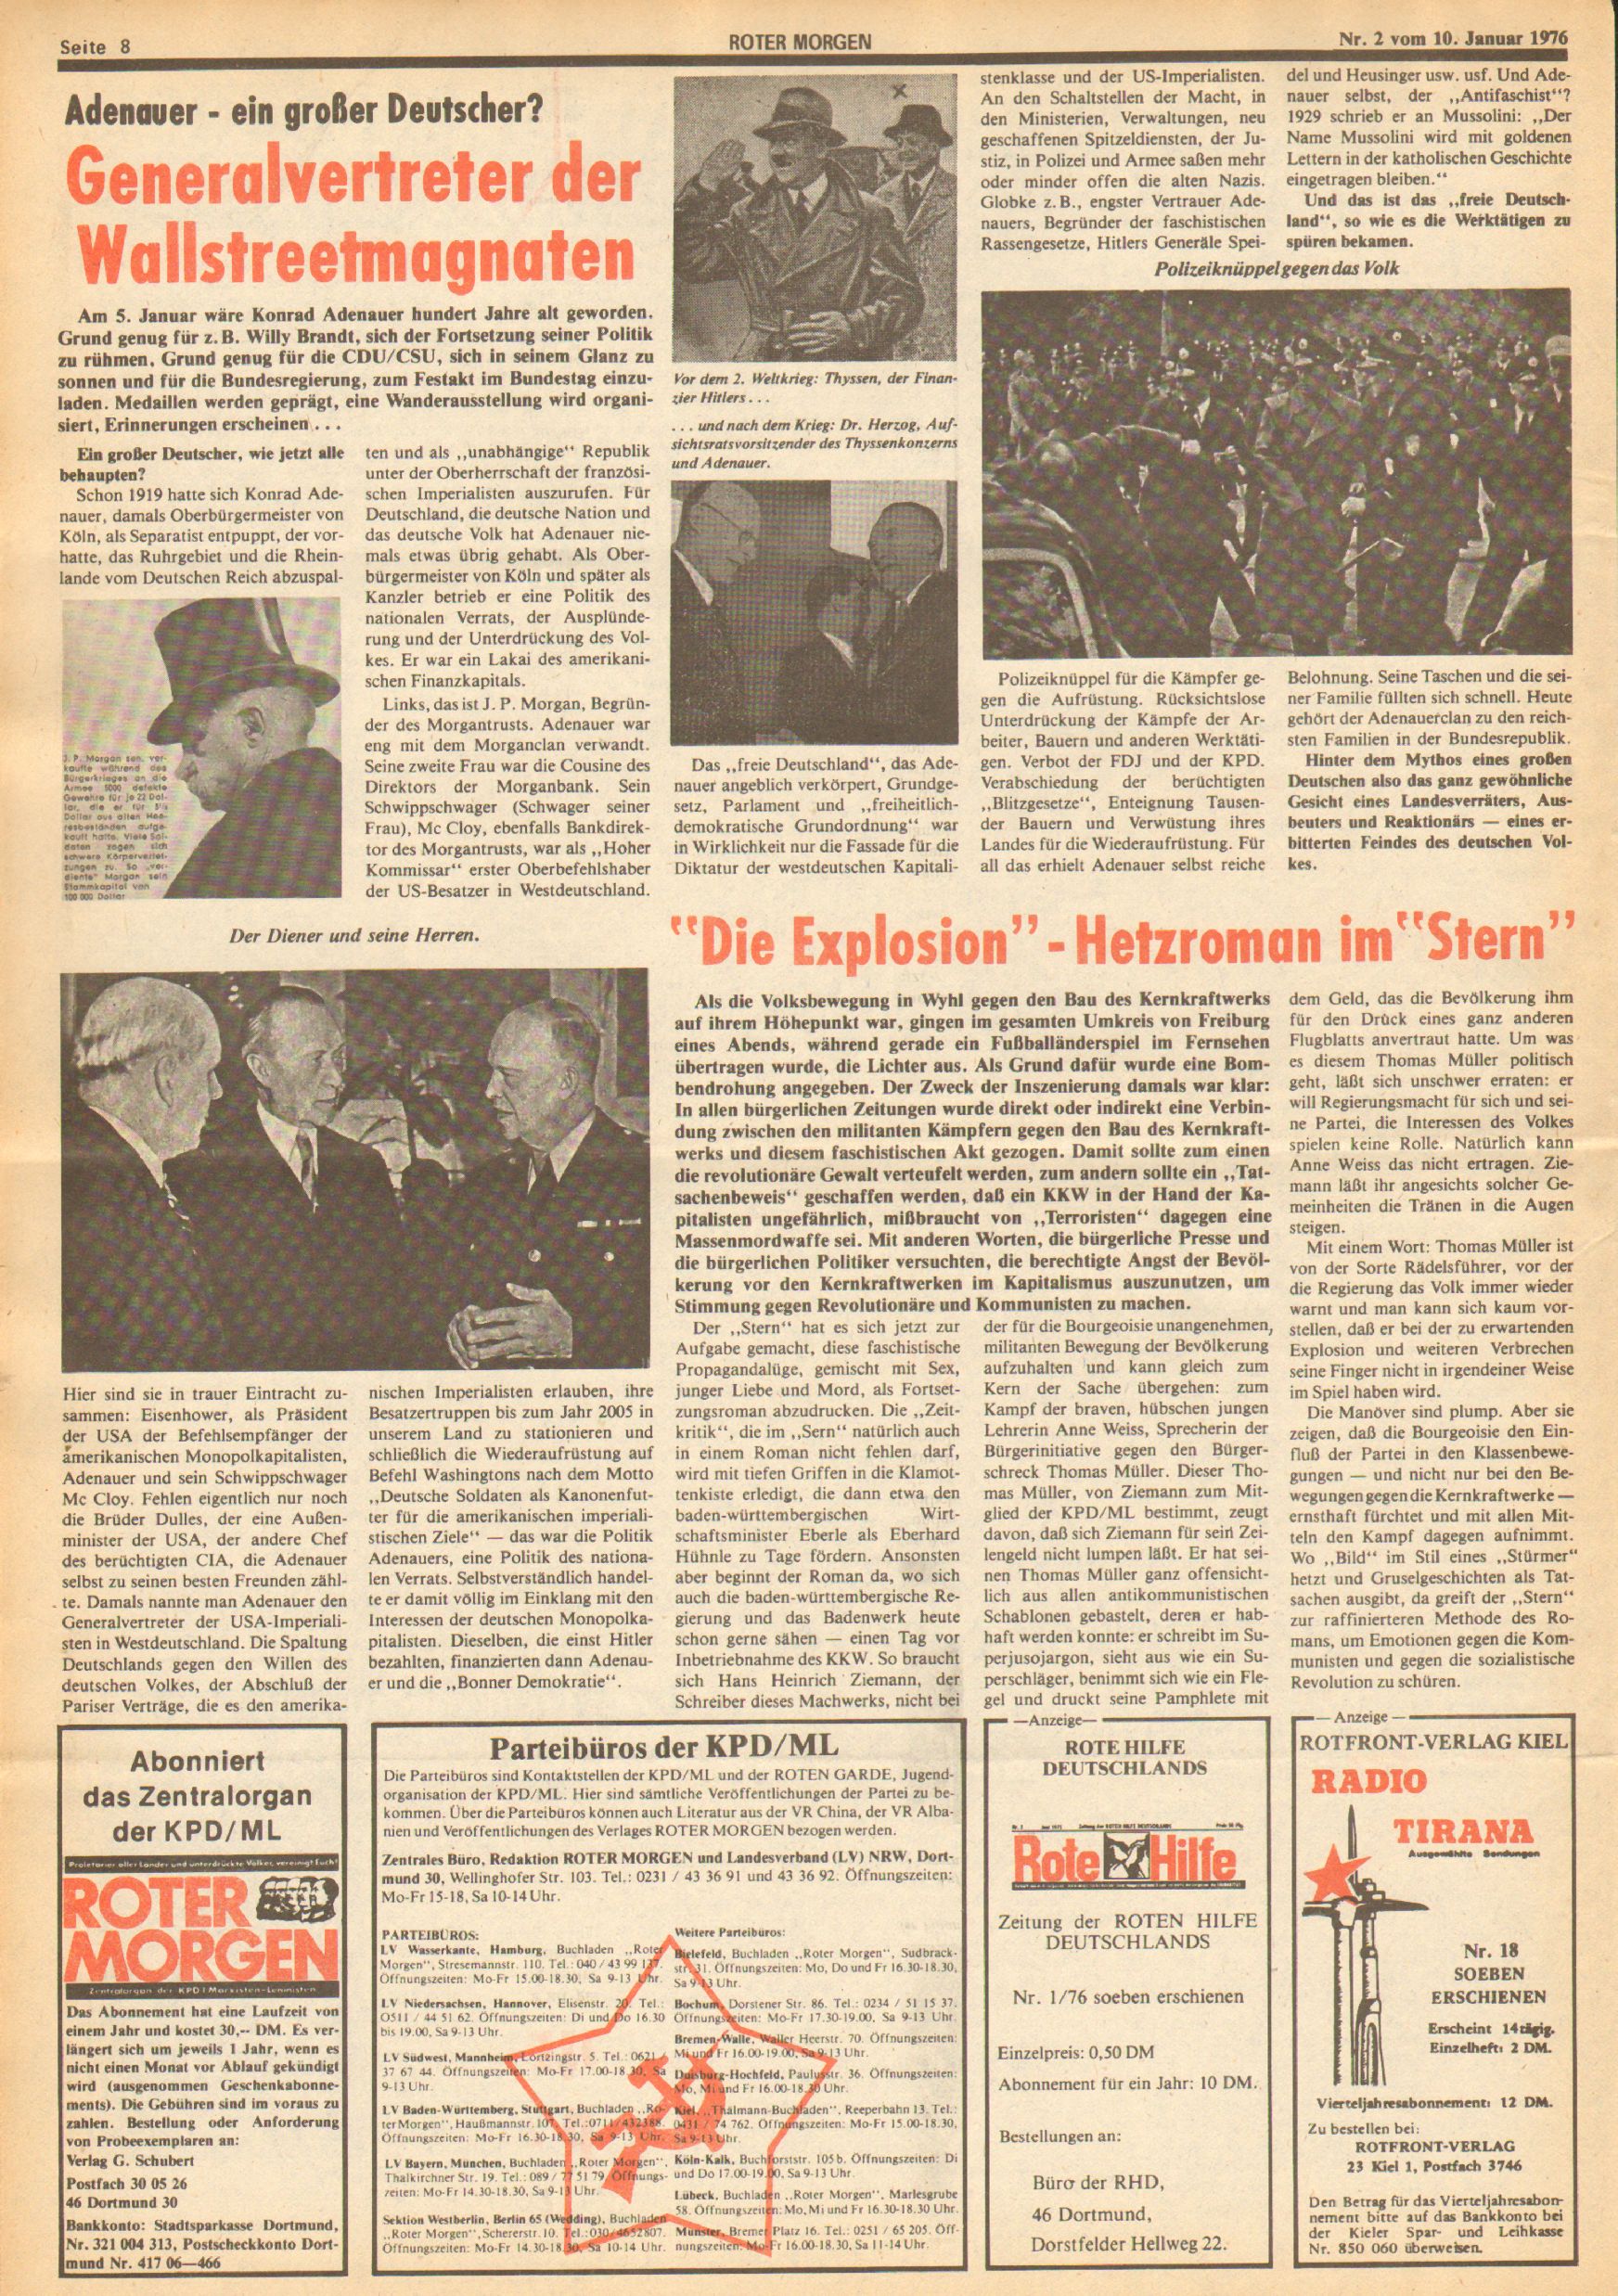 Roter Morgen, 10. Jg., 10. Januar 1976, Nr. 2, Seite 8